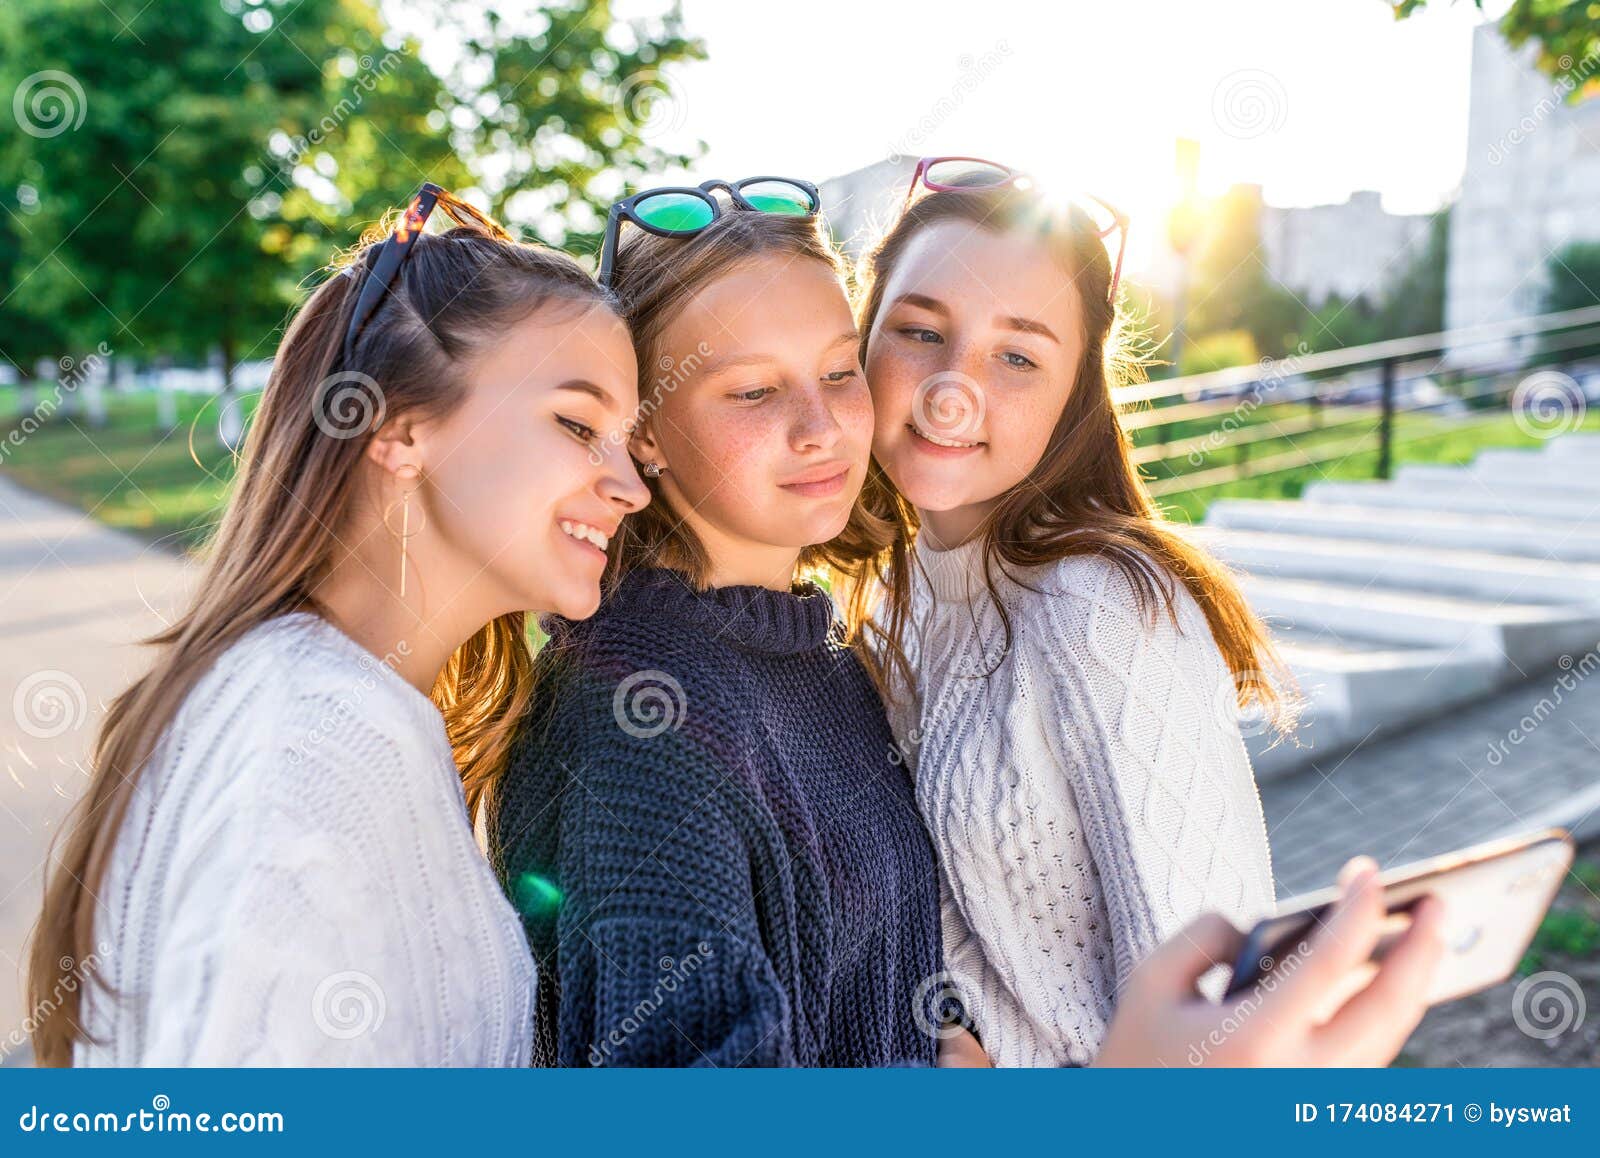 3 Girls Teenagers 12 13 14 Years, Summer Park, Holding Smartphone ...